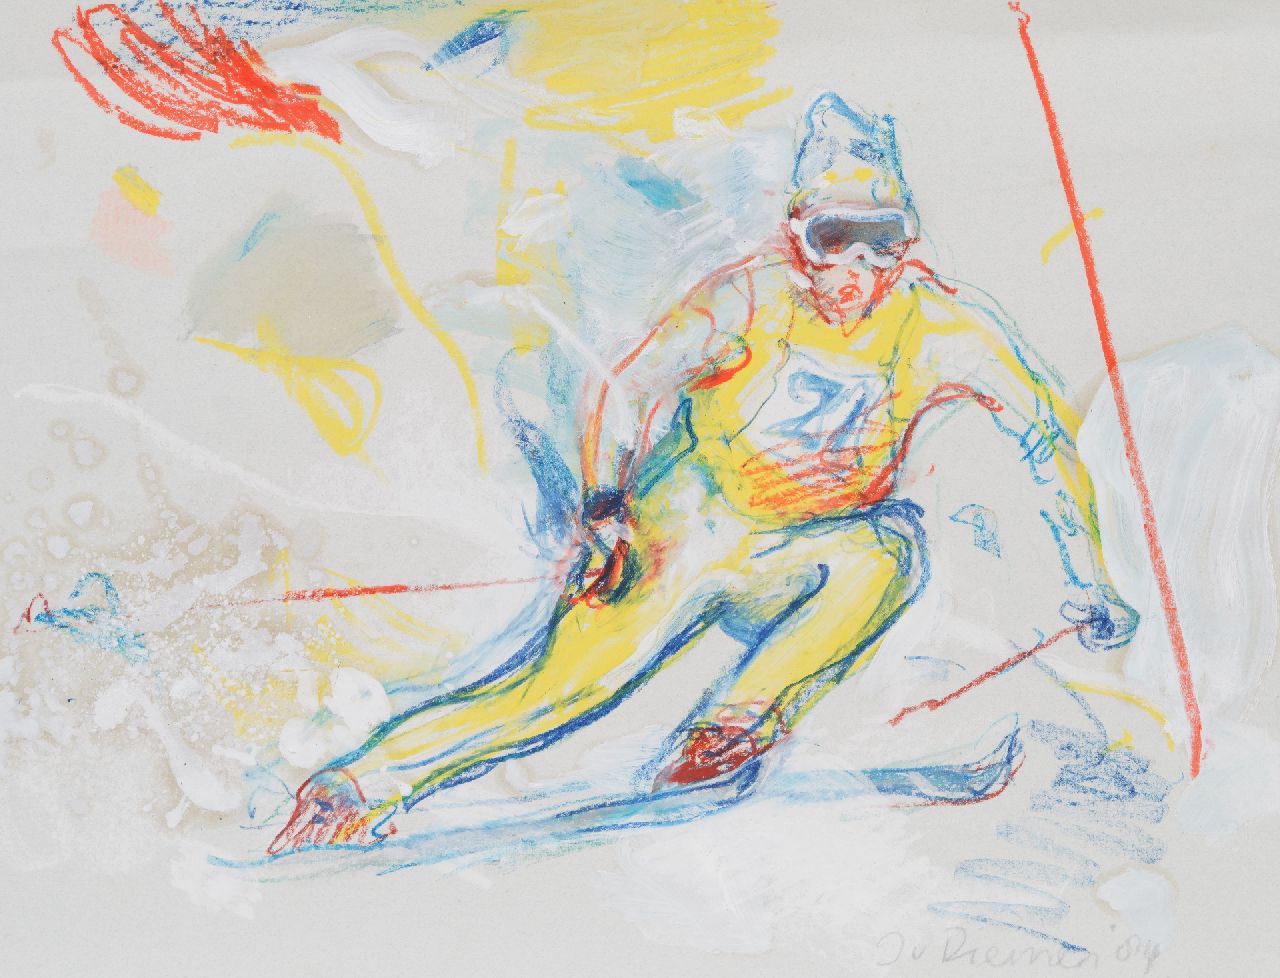 Diemen J. van | Jan van Diemen | Watercolours and drawings offered for sale | Slalom skier, gouache and chalk on paper 50.0 x 65.0 cm, signed l.r. and dated '84